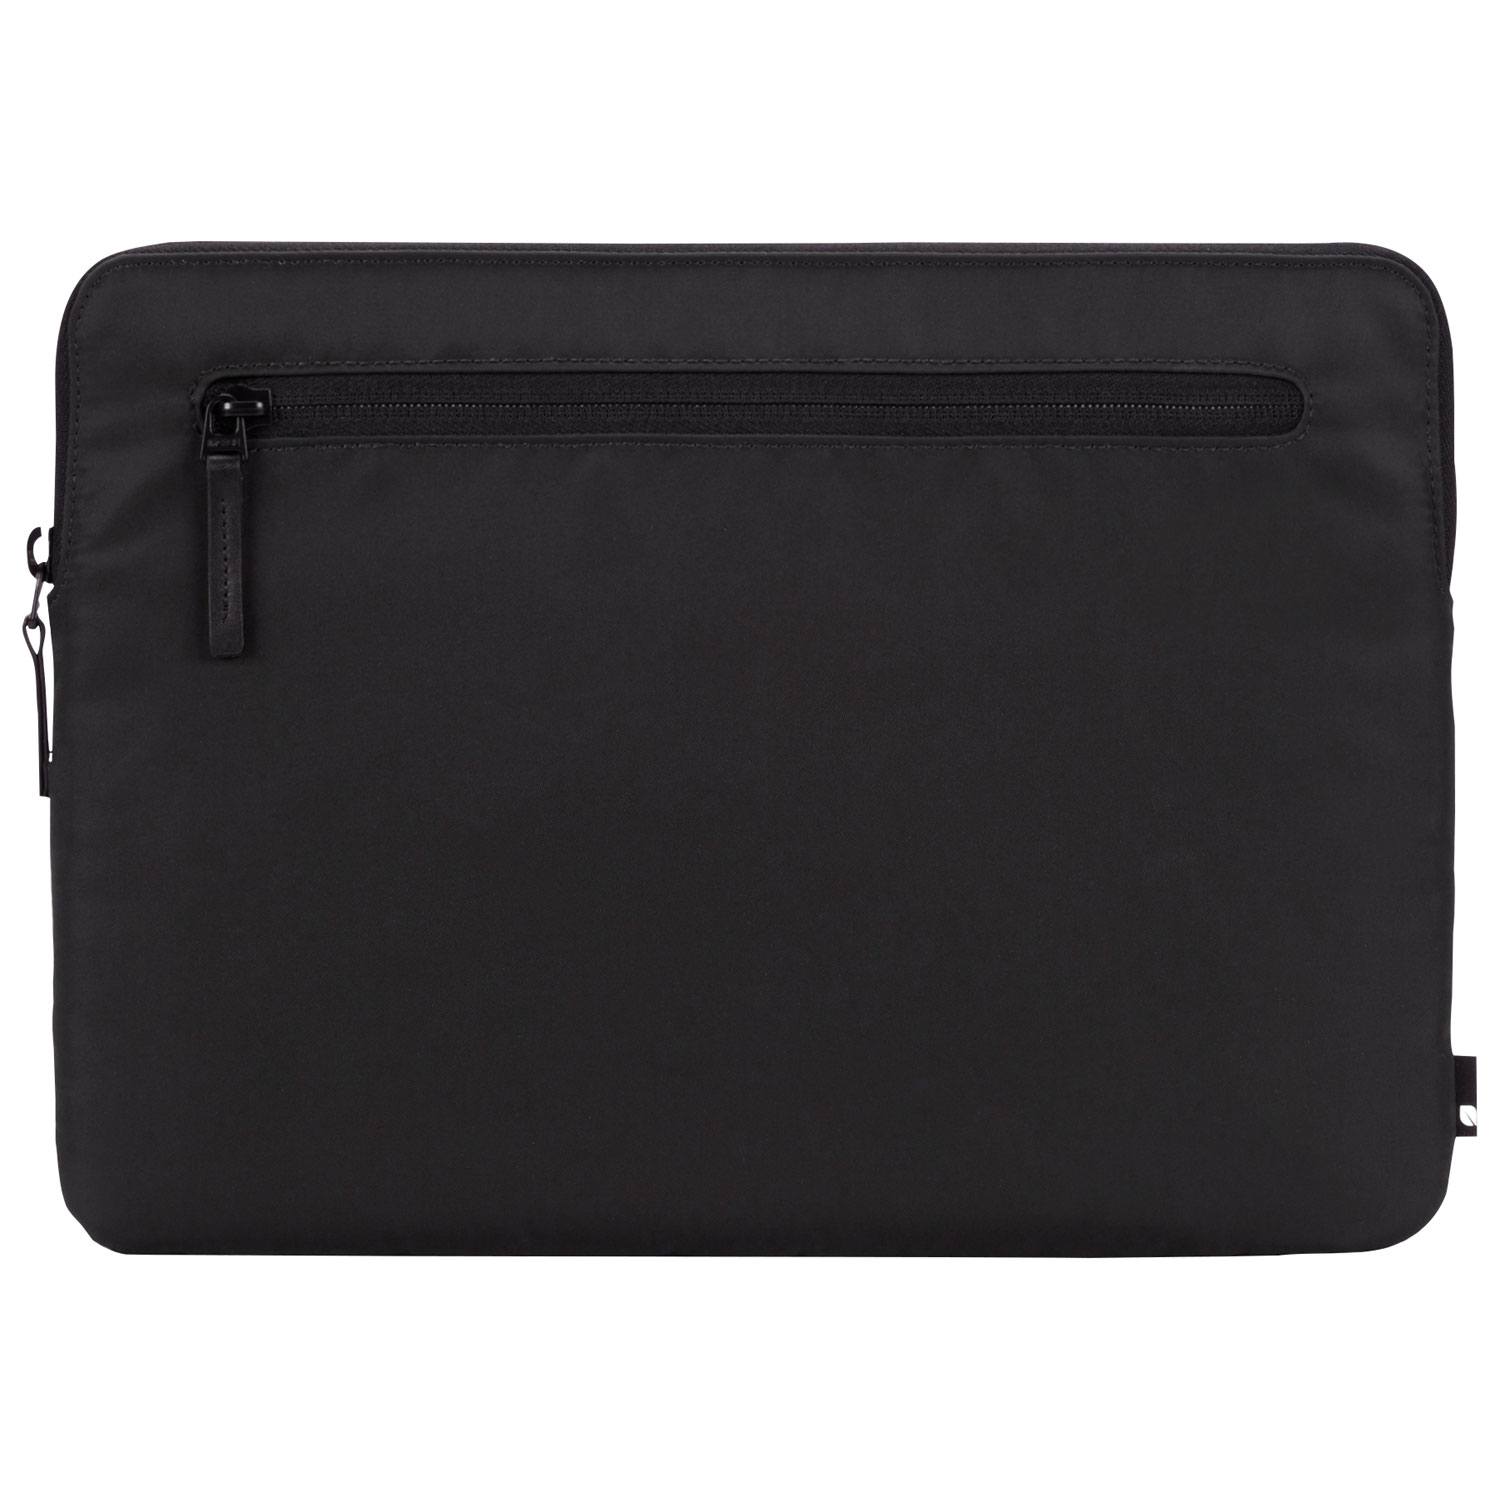 Incase Compact 13" MacBook Air/Pro Sleeve - Black